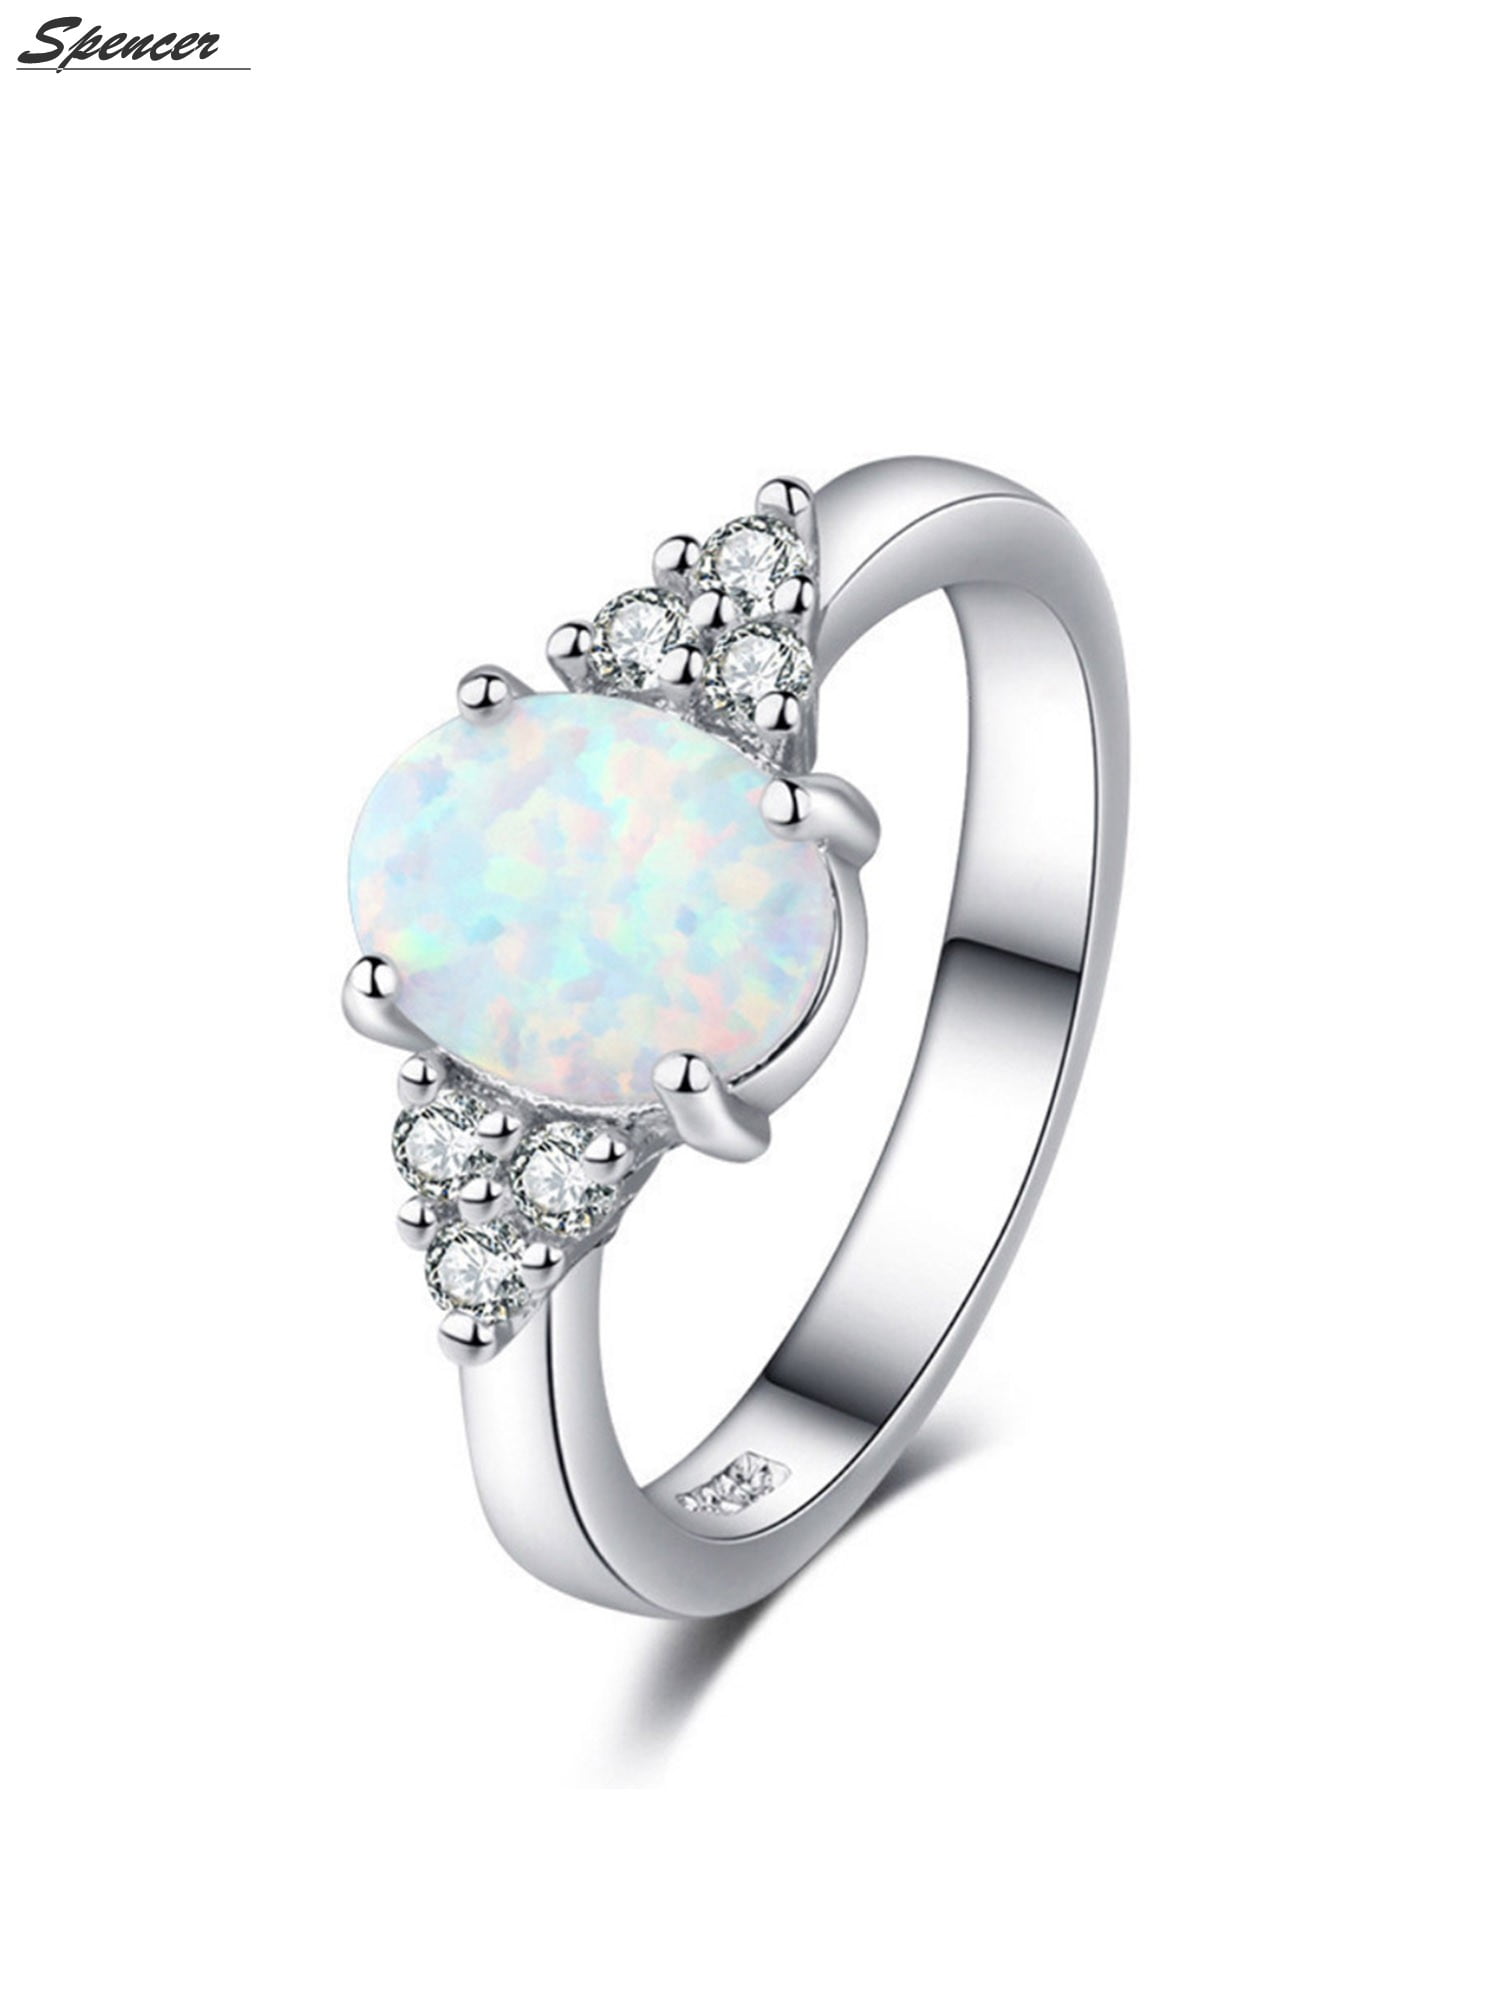 Fashion 925 Silver White Fire Opal Ring Women Wedding Proposal Jewelry Size 6-10 